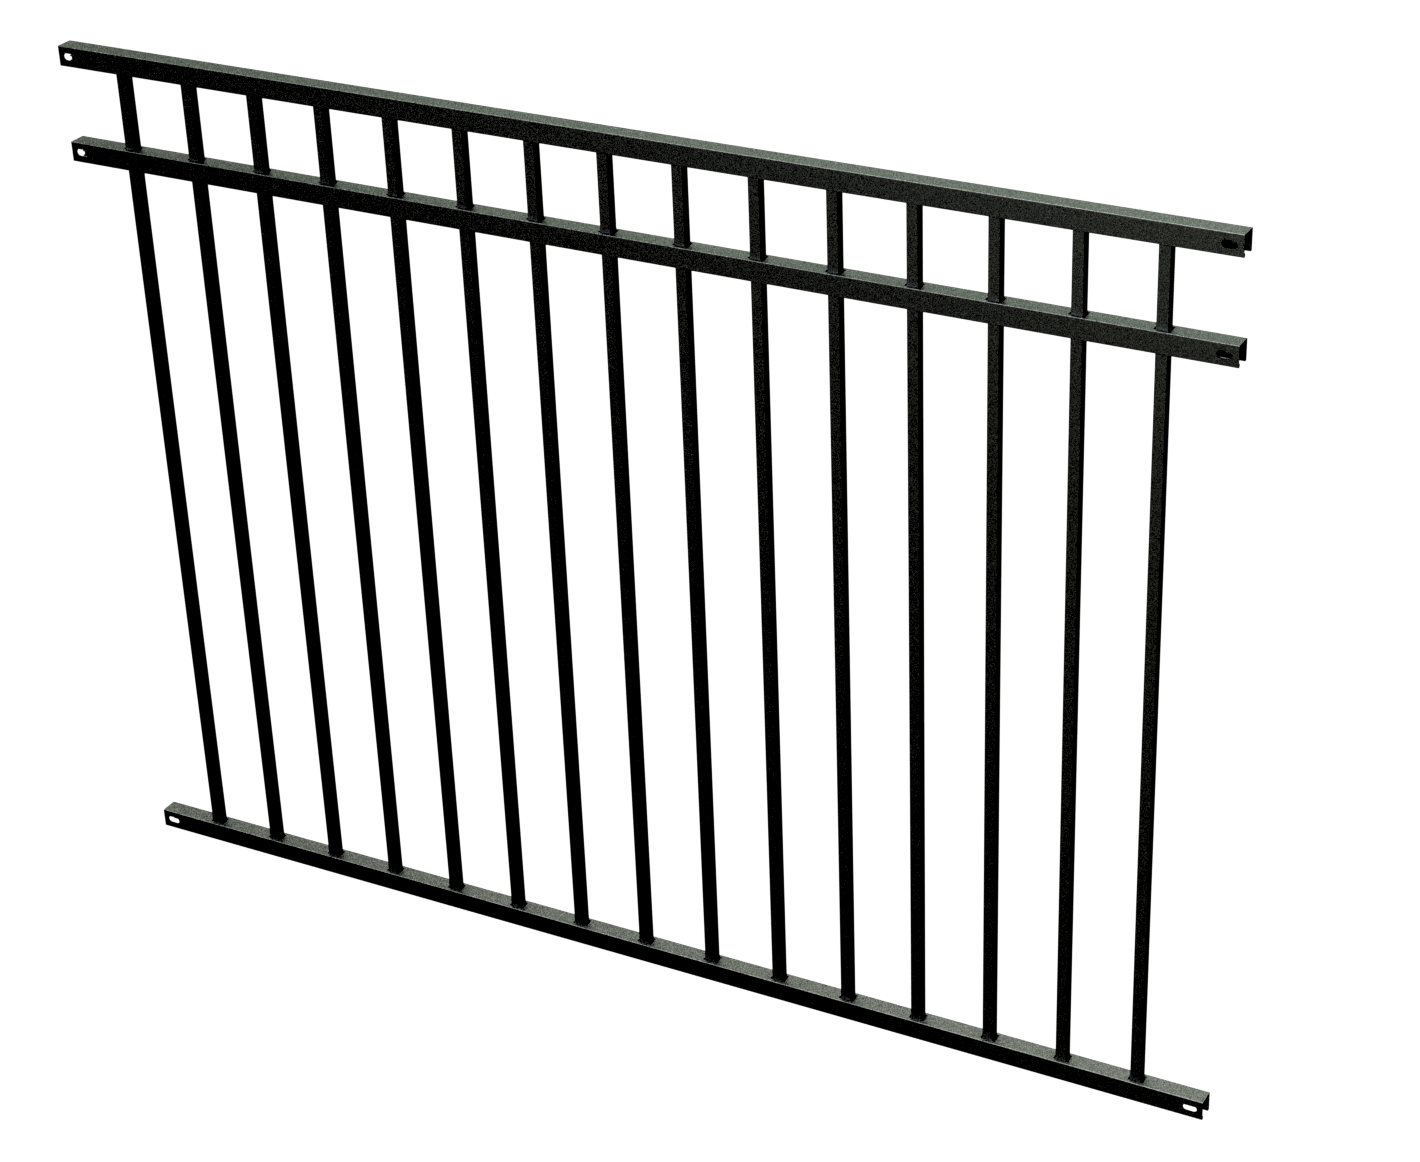 TruView-Alu - Ornamental Aluminum Fence Panels